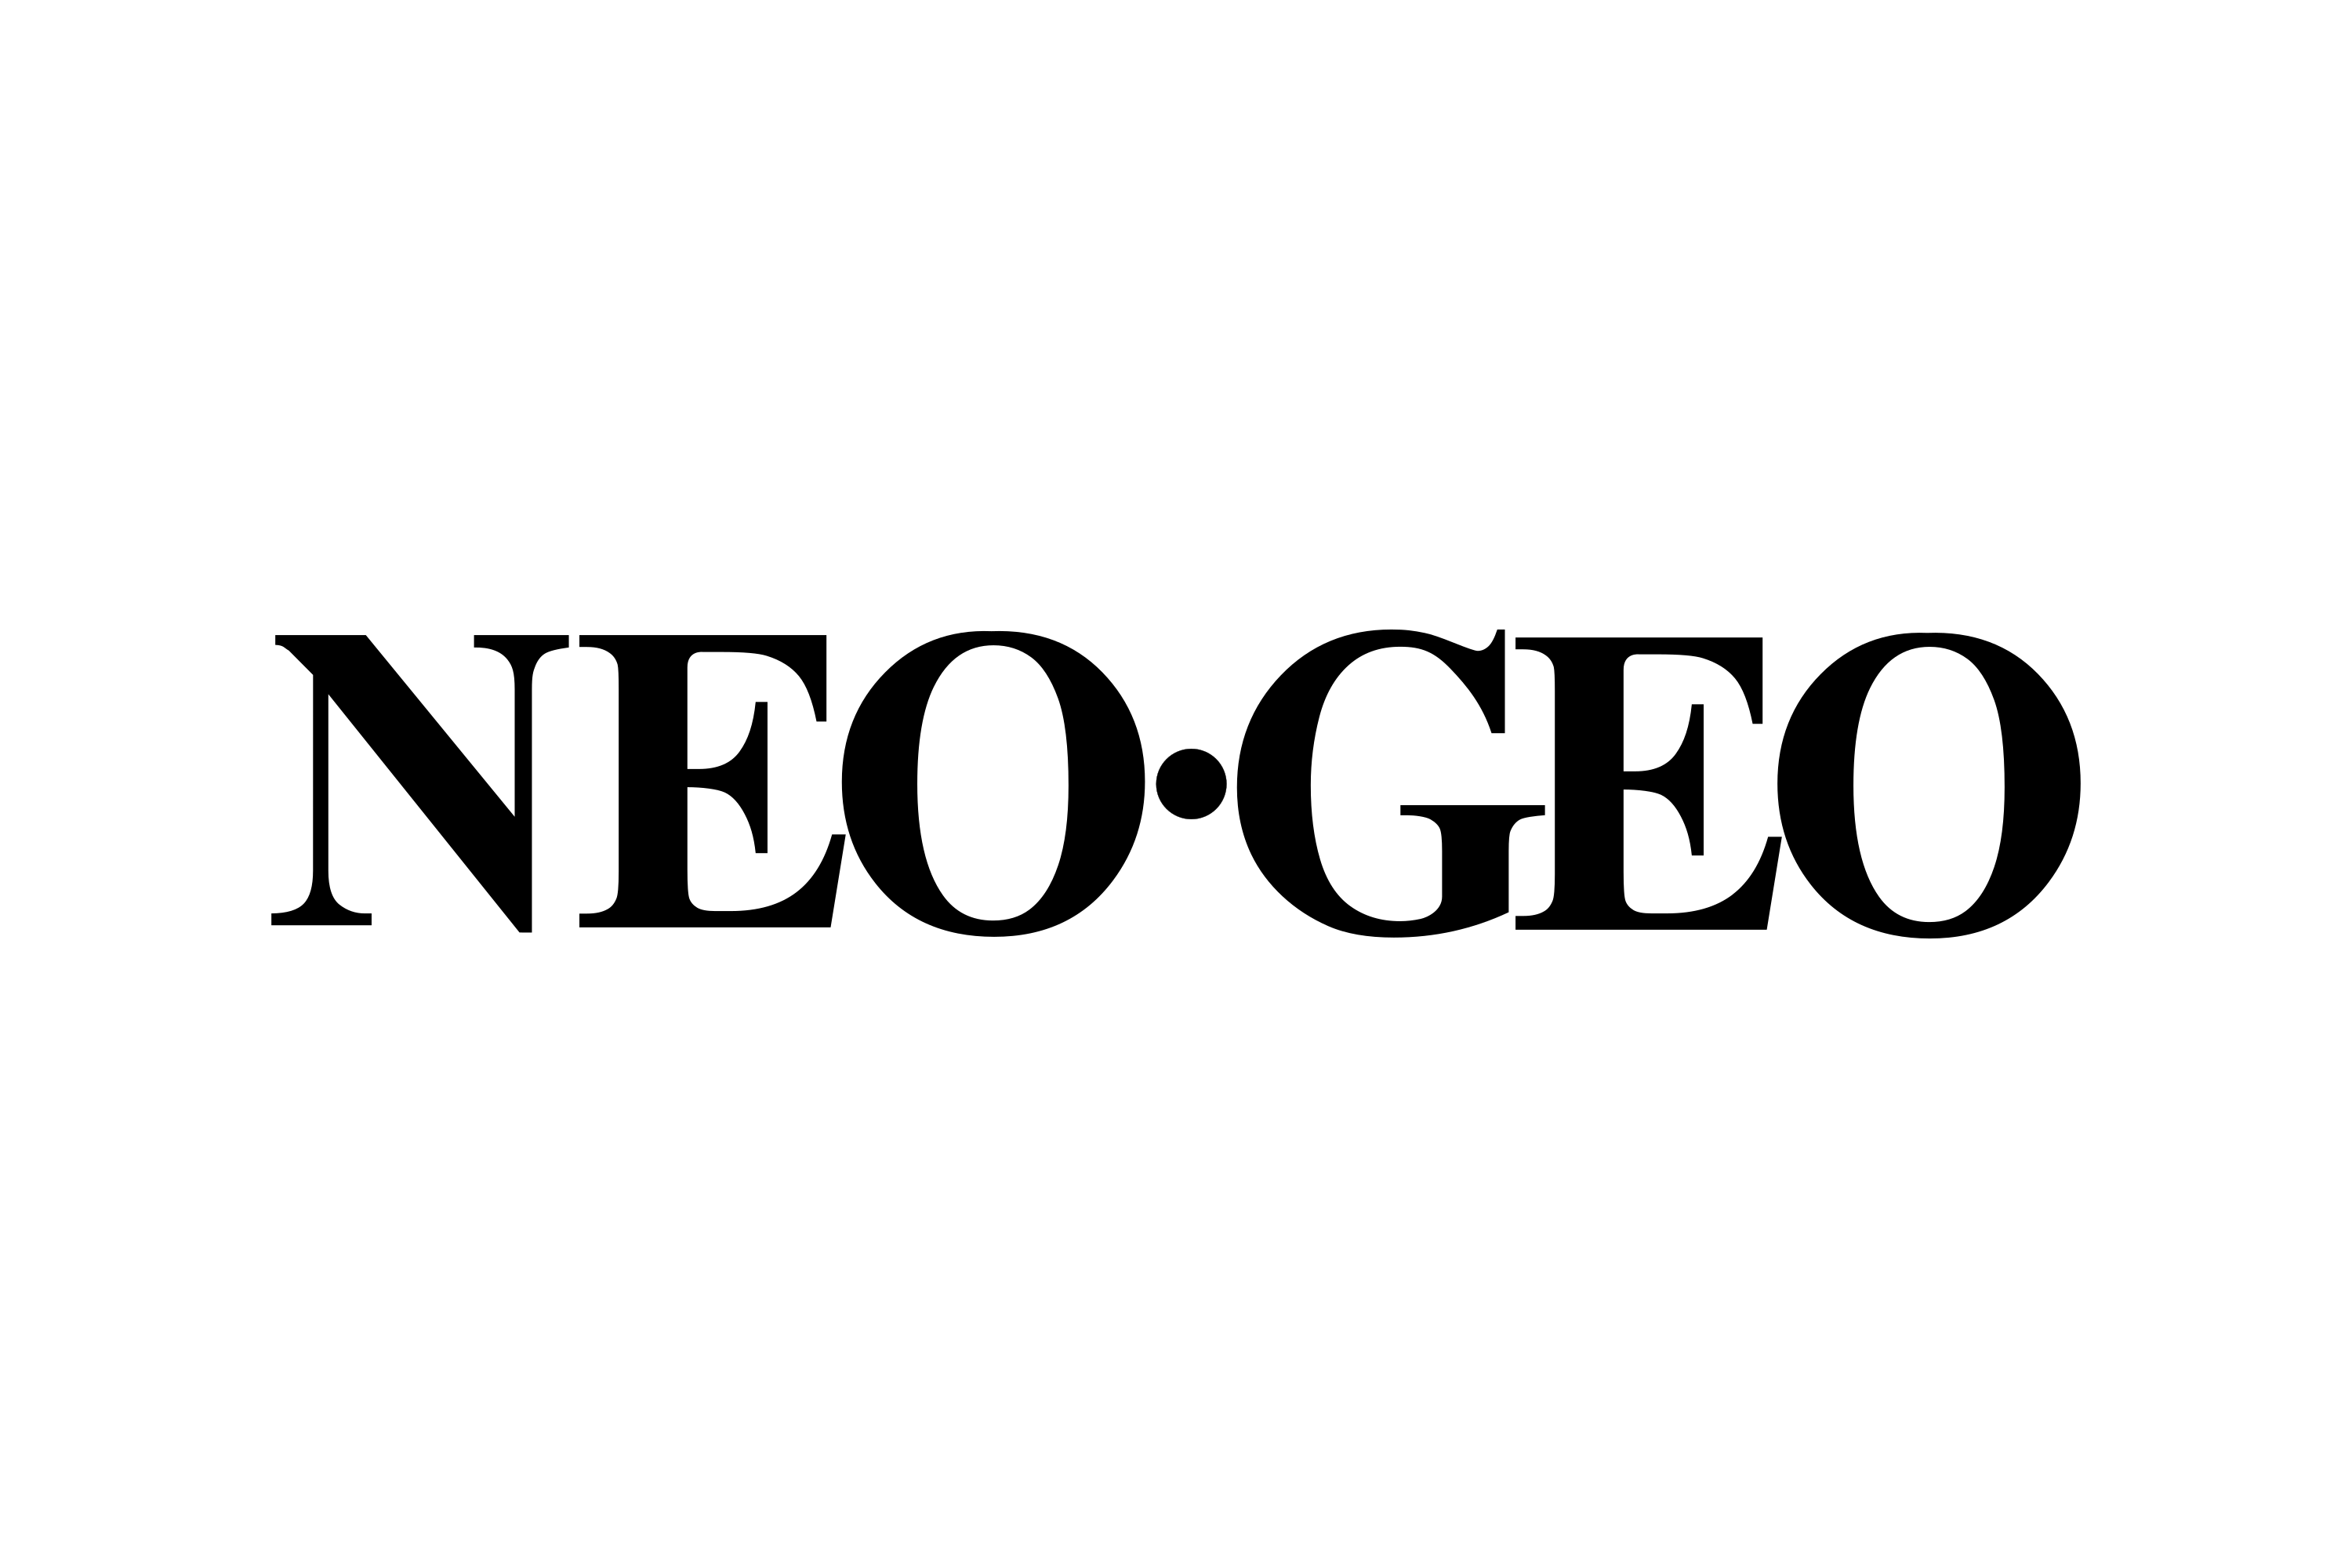 Download Neo Geo Logo In Svg Vector Or Png File Format Logo Wine Gambaran